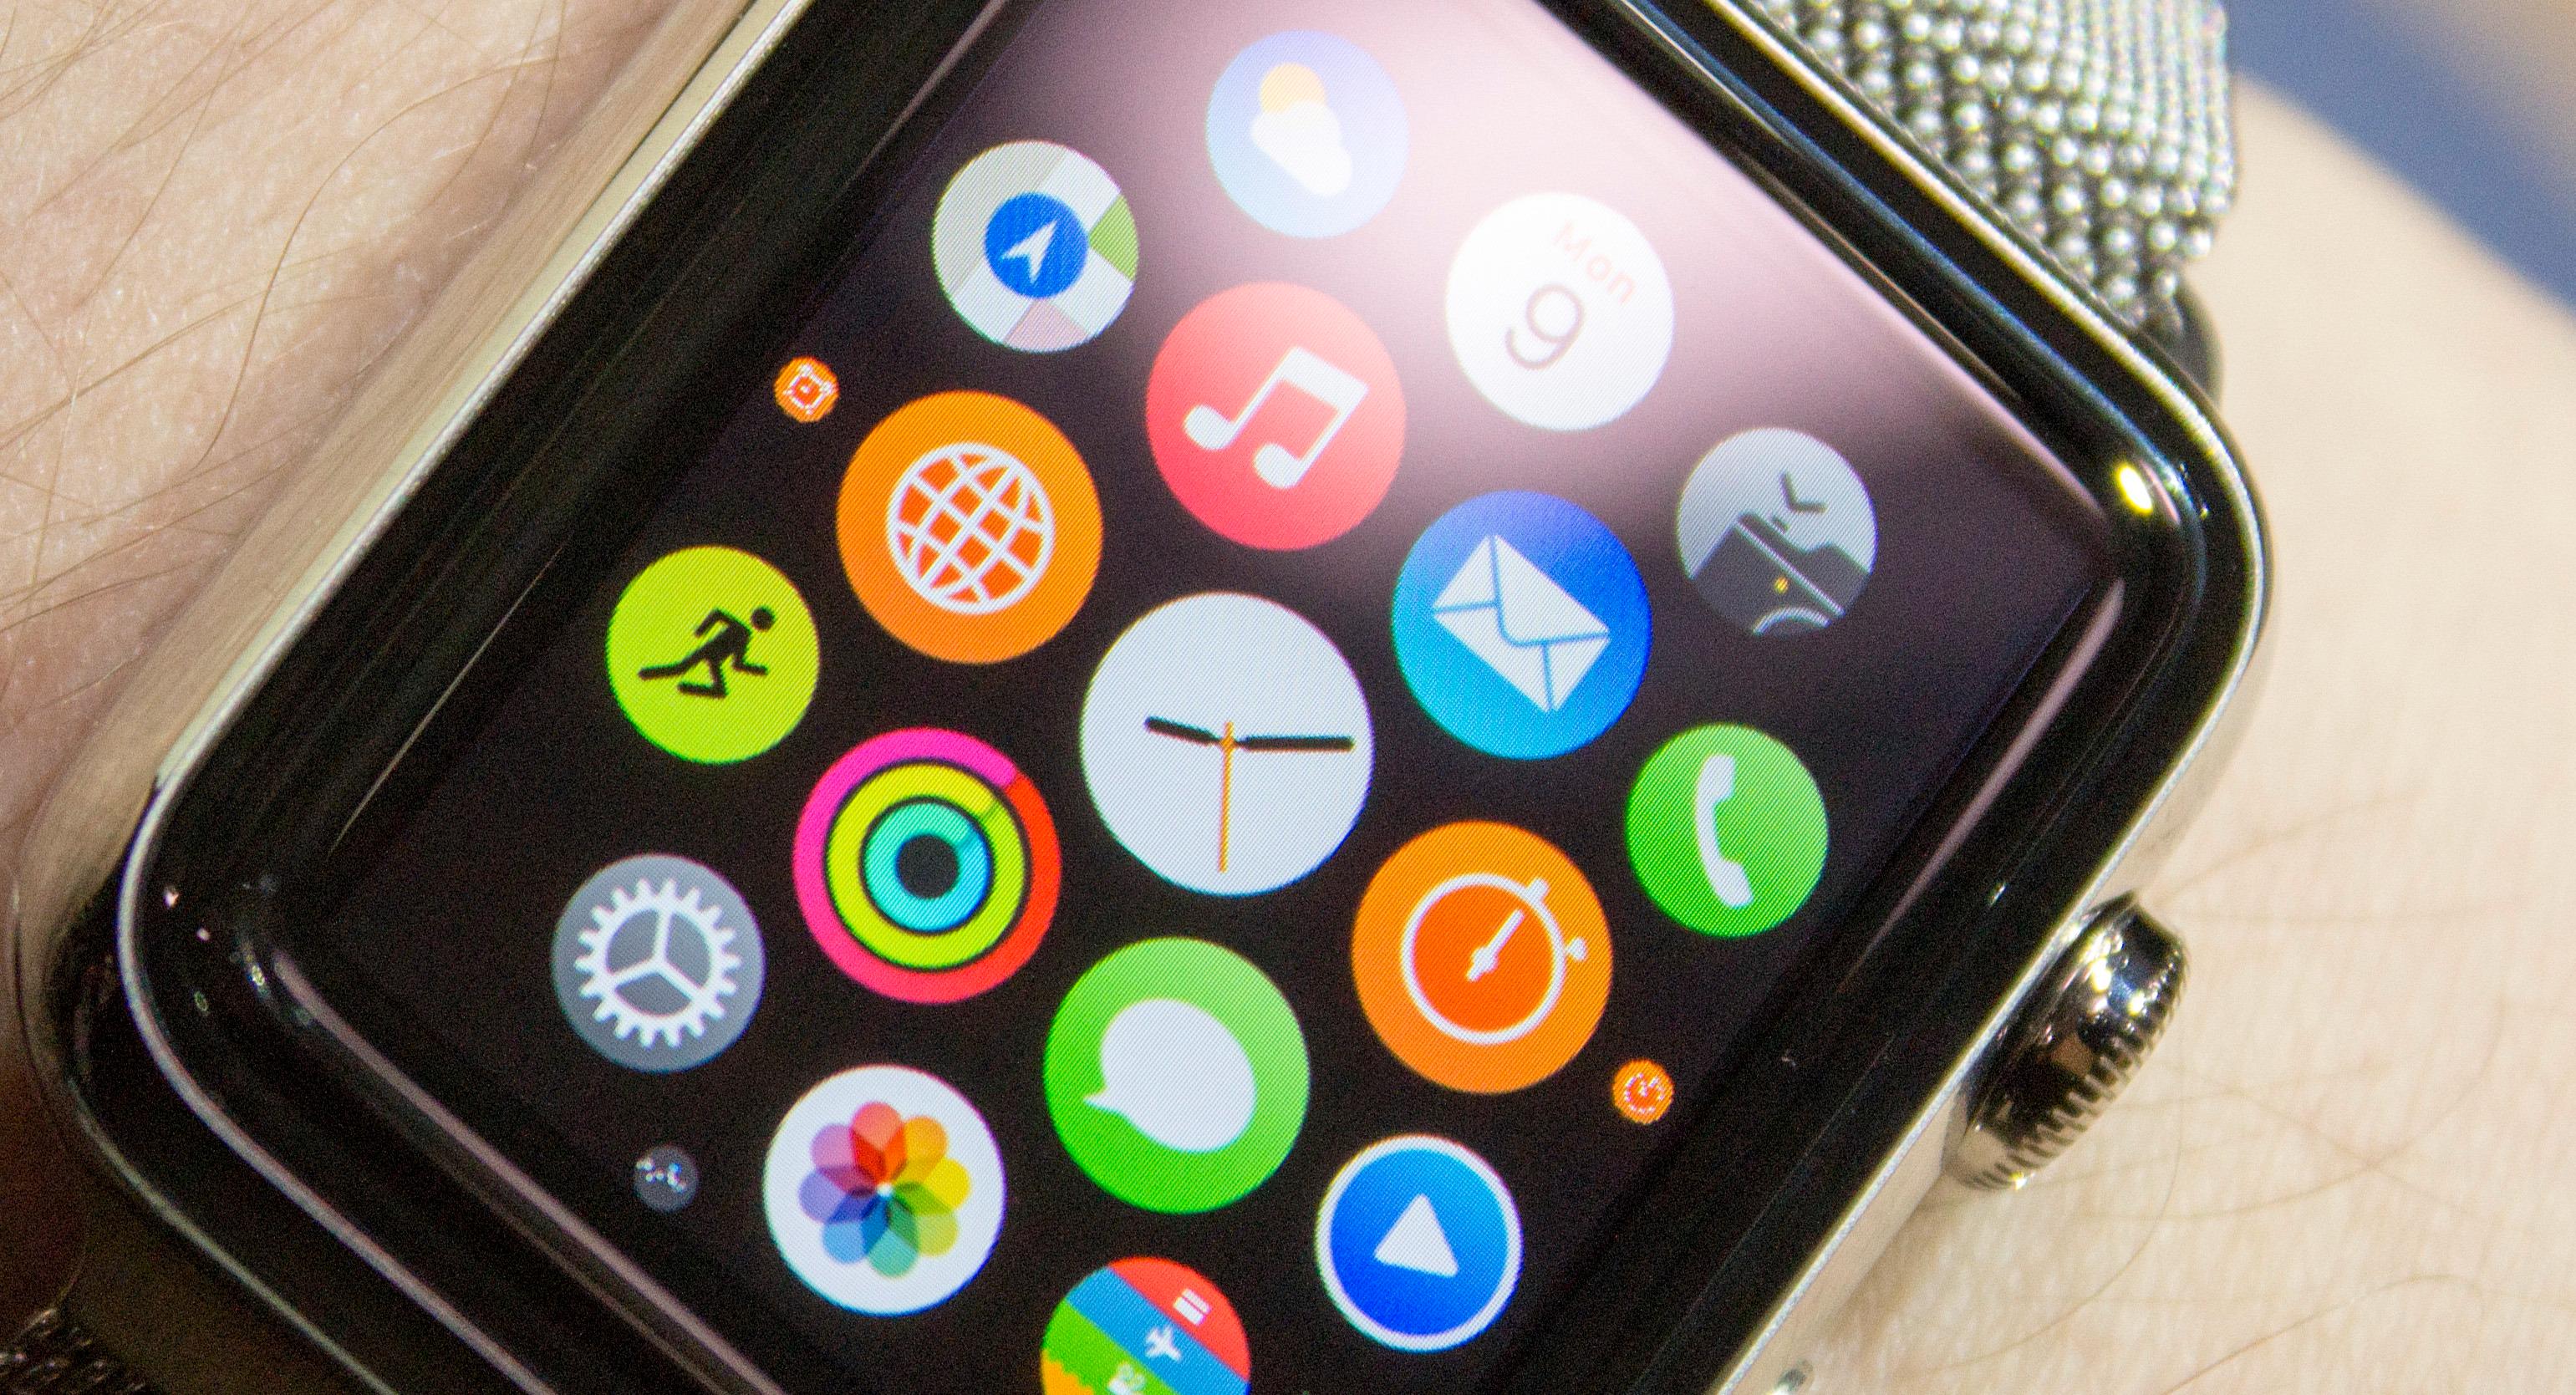 Kan Apple Watch holde unna Android uansett? Foto: Finn Jarle Kvalheim, Tek.no